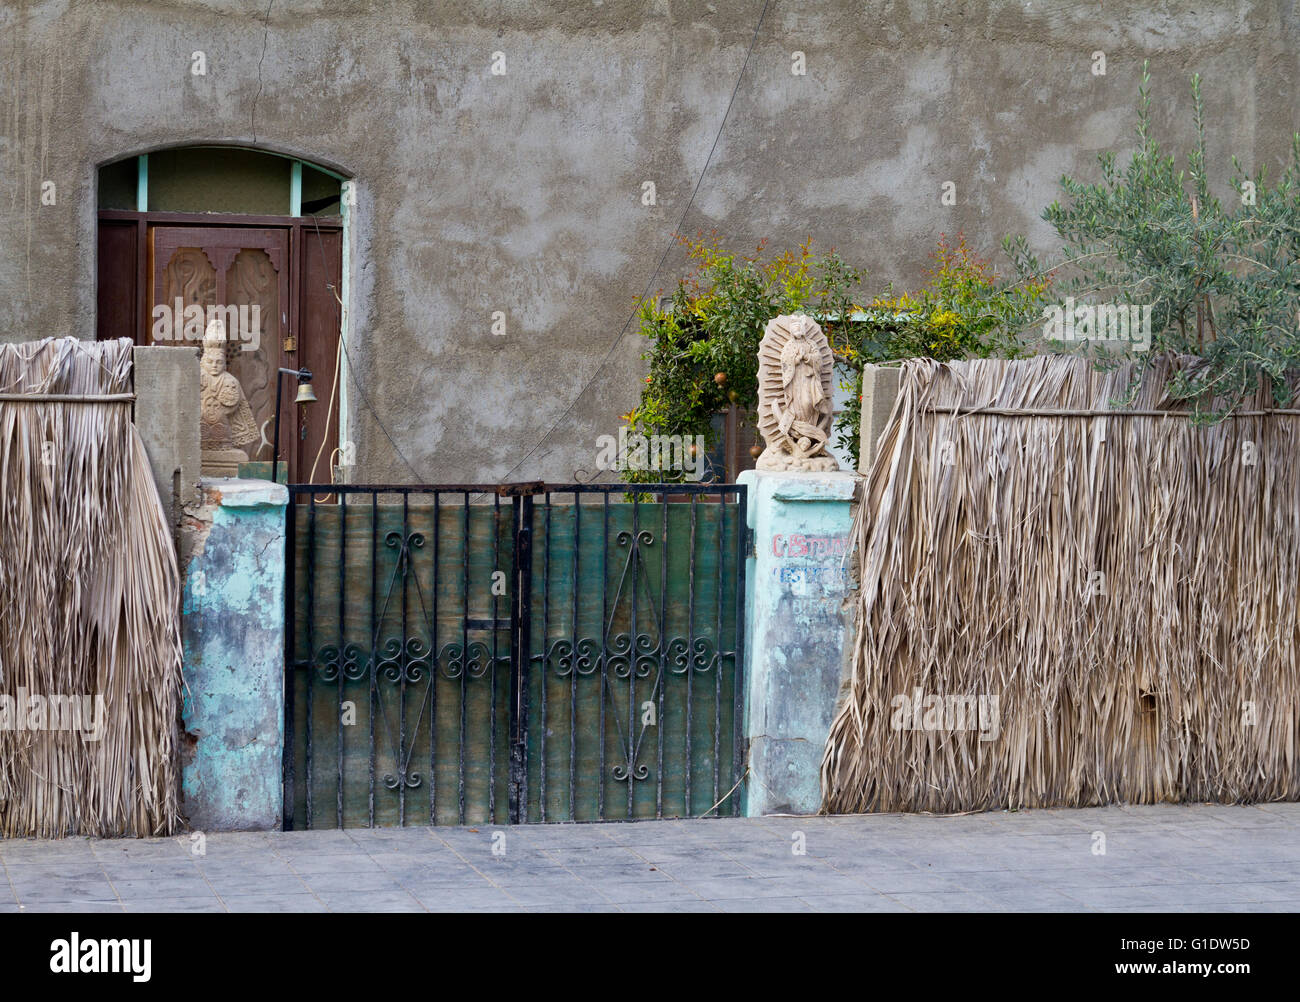 Street View von Zaun, Tor und Tür eines Hauses in Todos Santos, Baja, Mexiko. Stockfoto